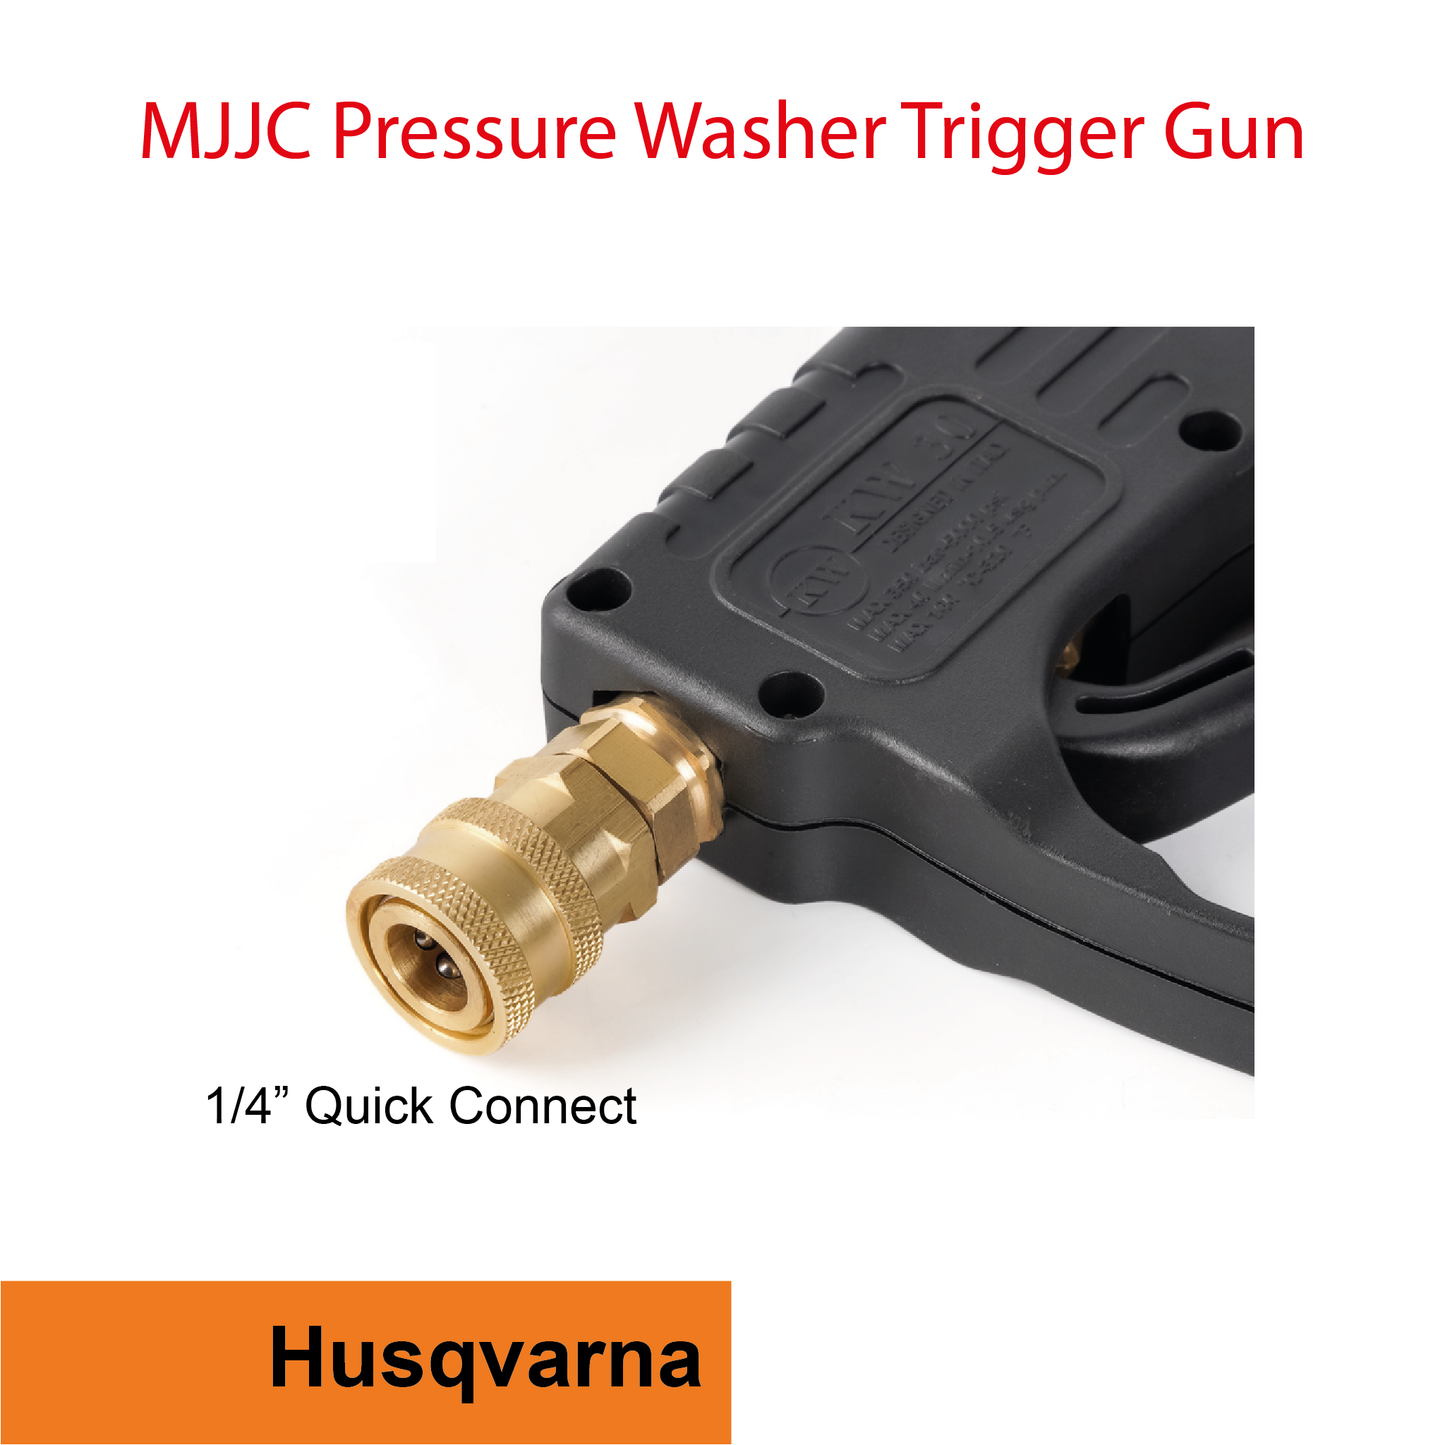 Husqvarna - MJJC Light Weight Pressure Washer Trigger Spray Gun with Live Swivel